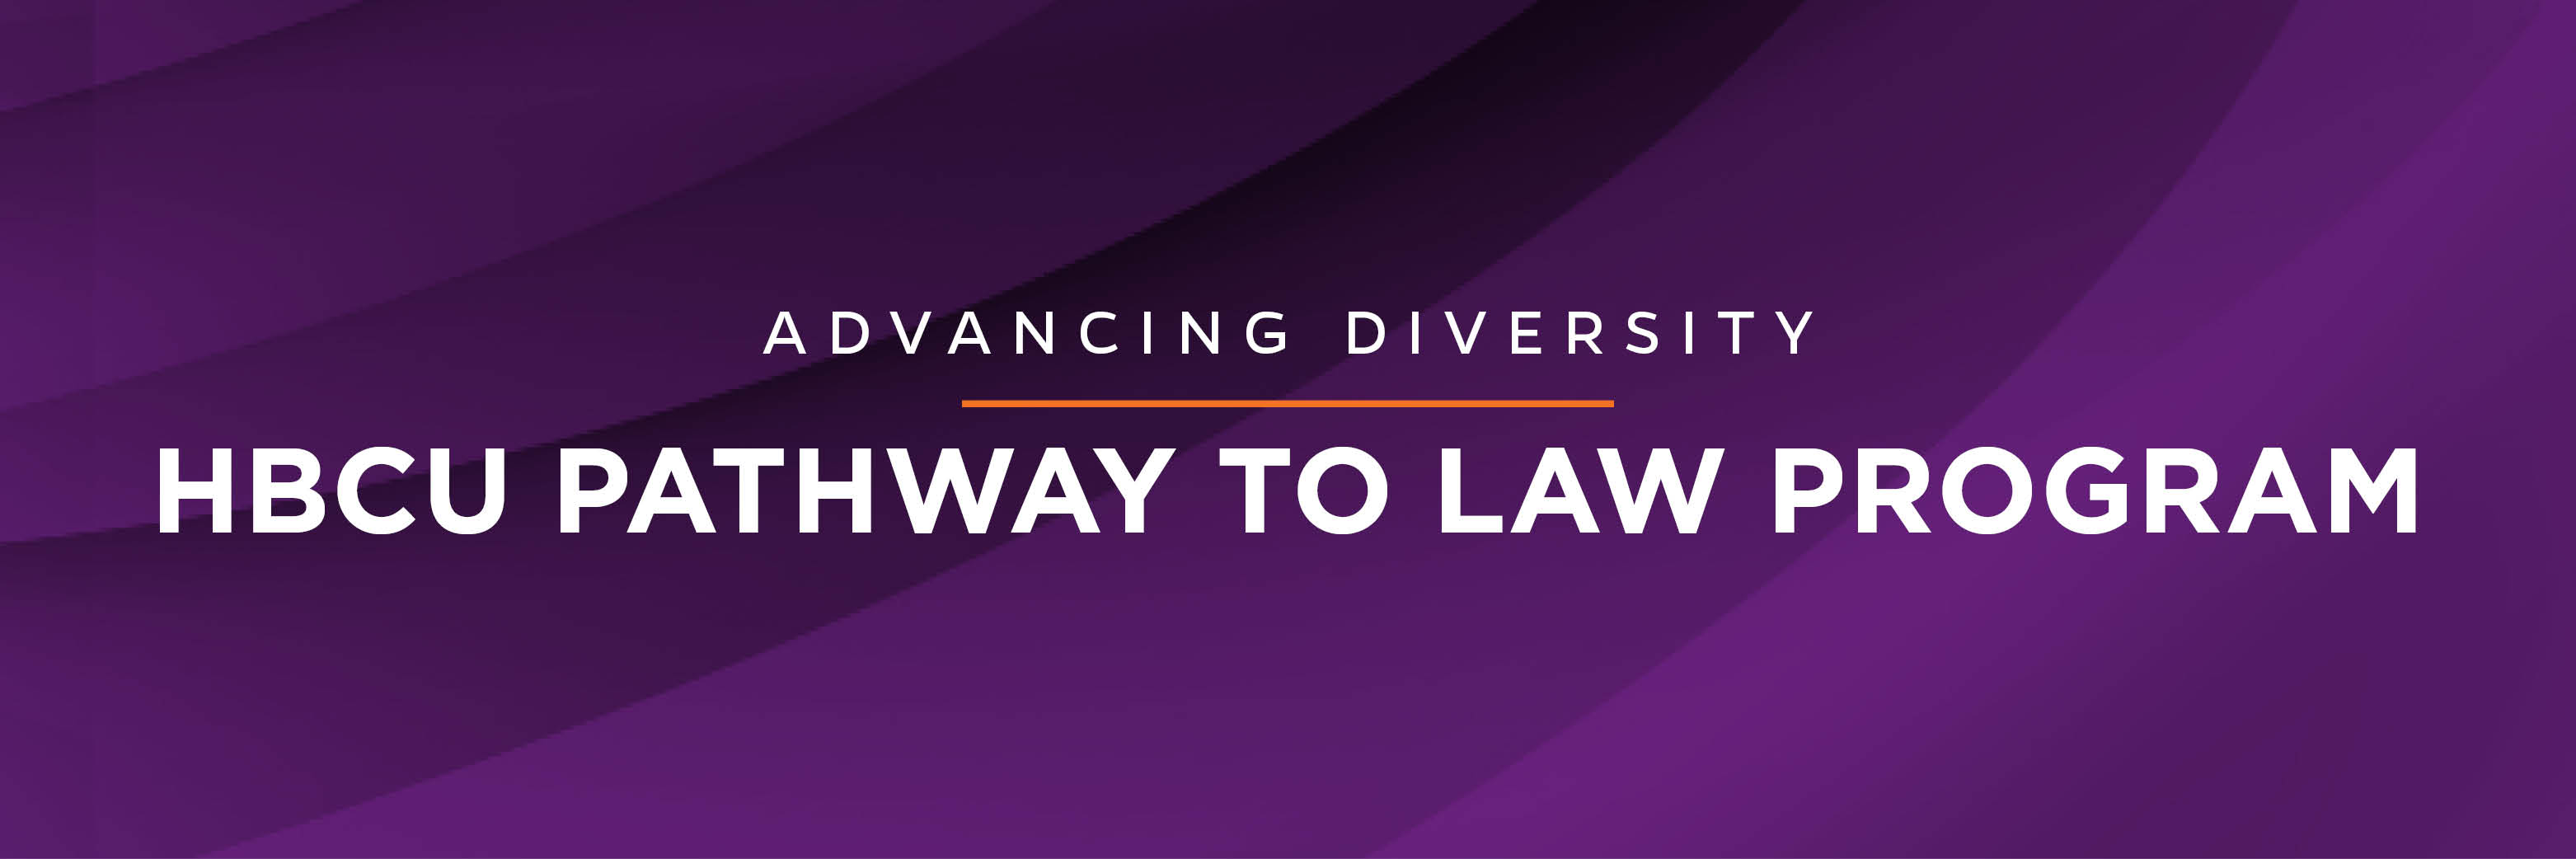 HBCU Pathway to Law Program